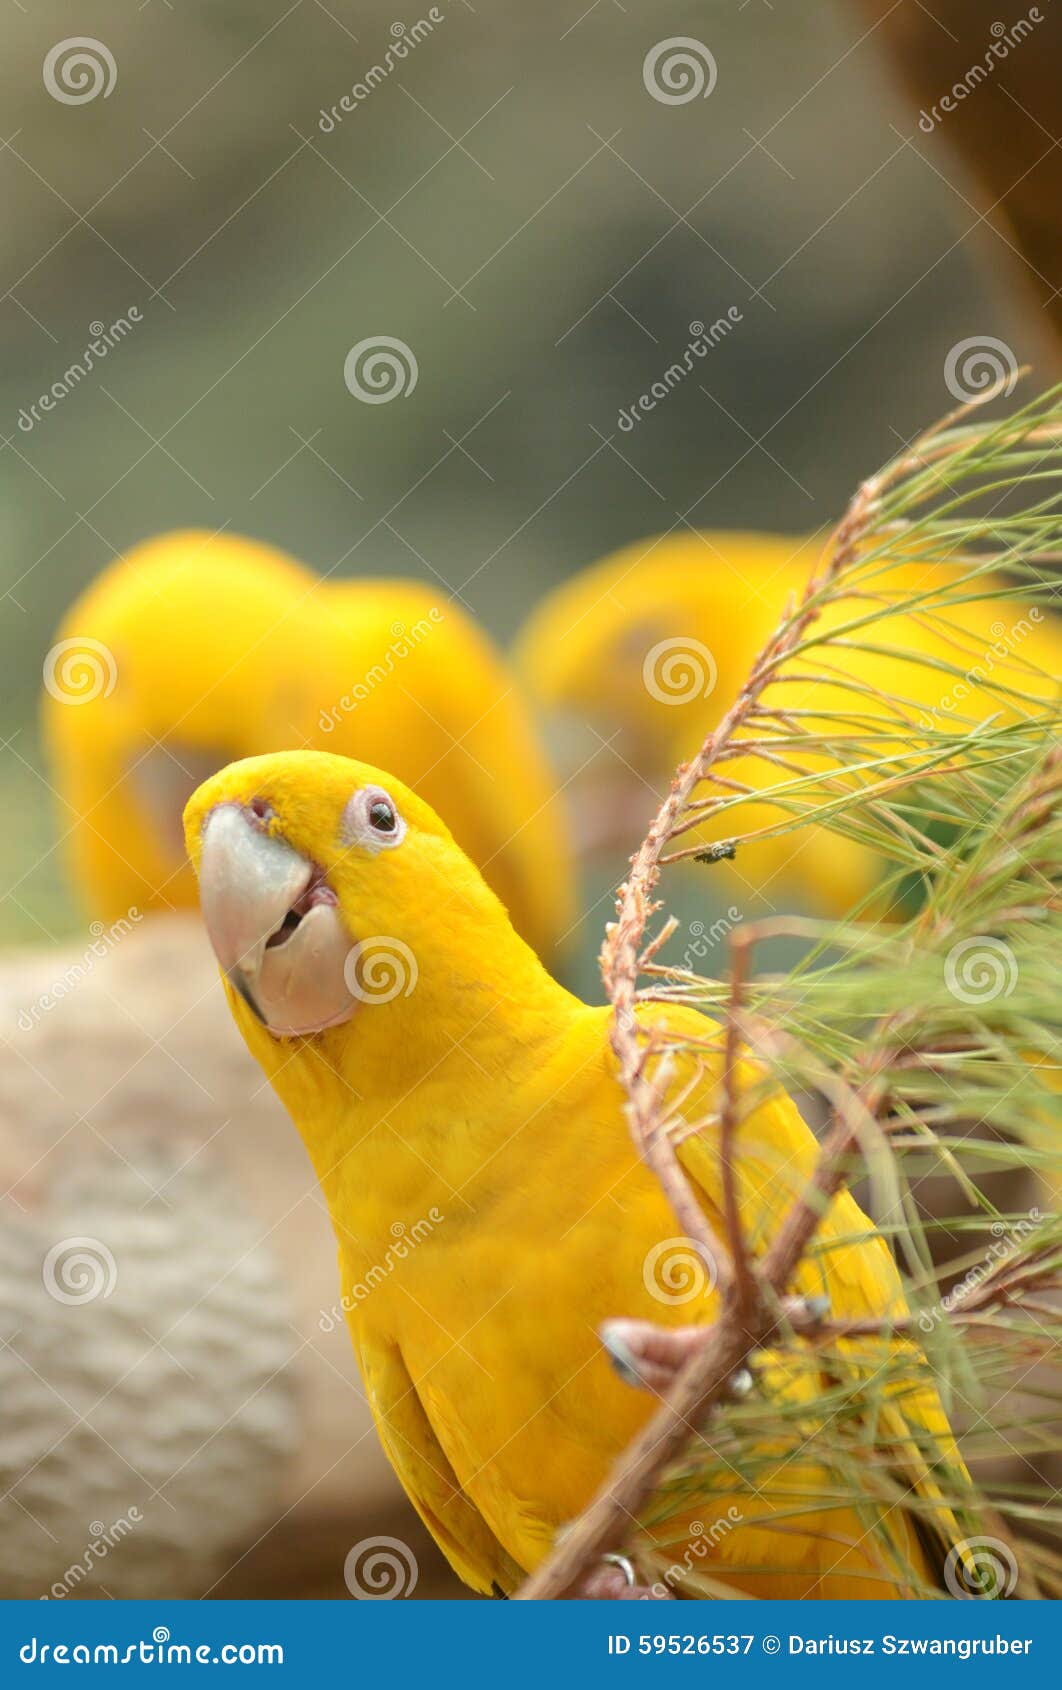 beautiful parrot in loro park in puerto de la cruz on tenerife, canary islands